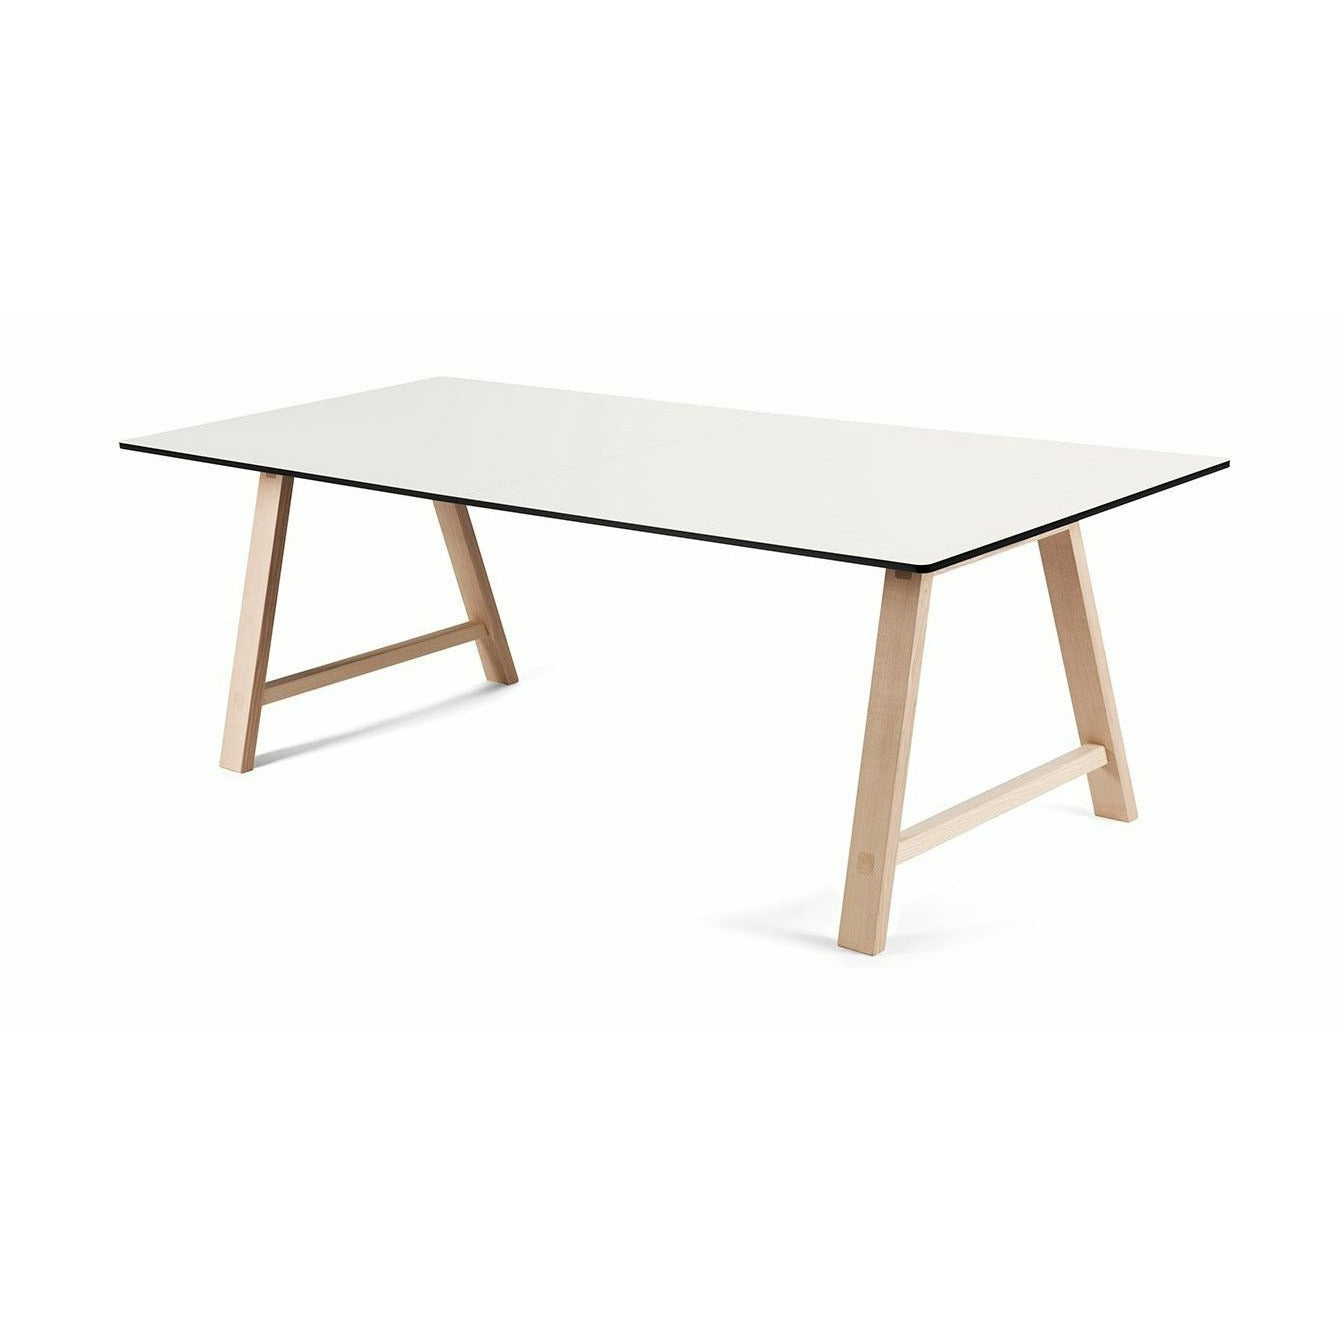 Andersen Furniture T1 T1 Table extensible, stratifié blanc, chêne savonned, 220 cm